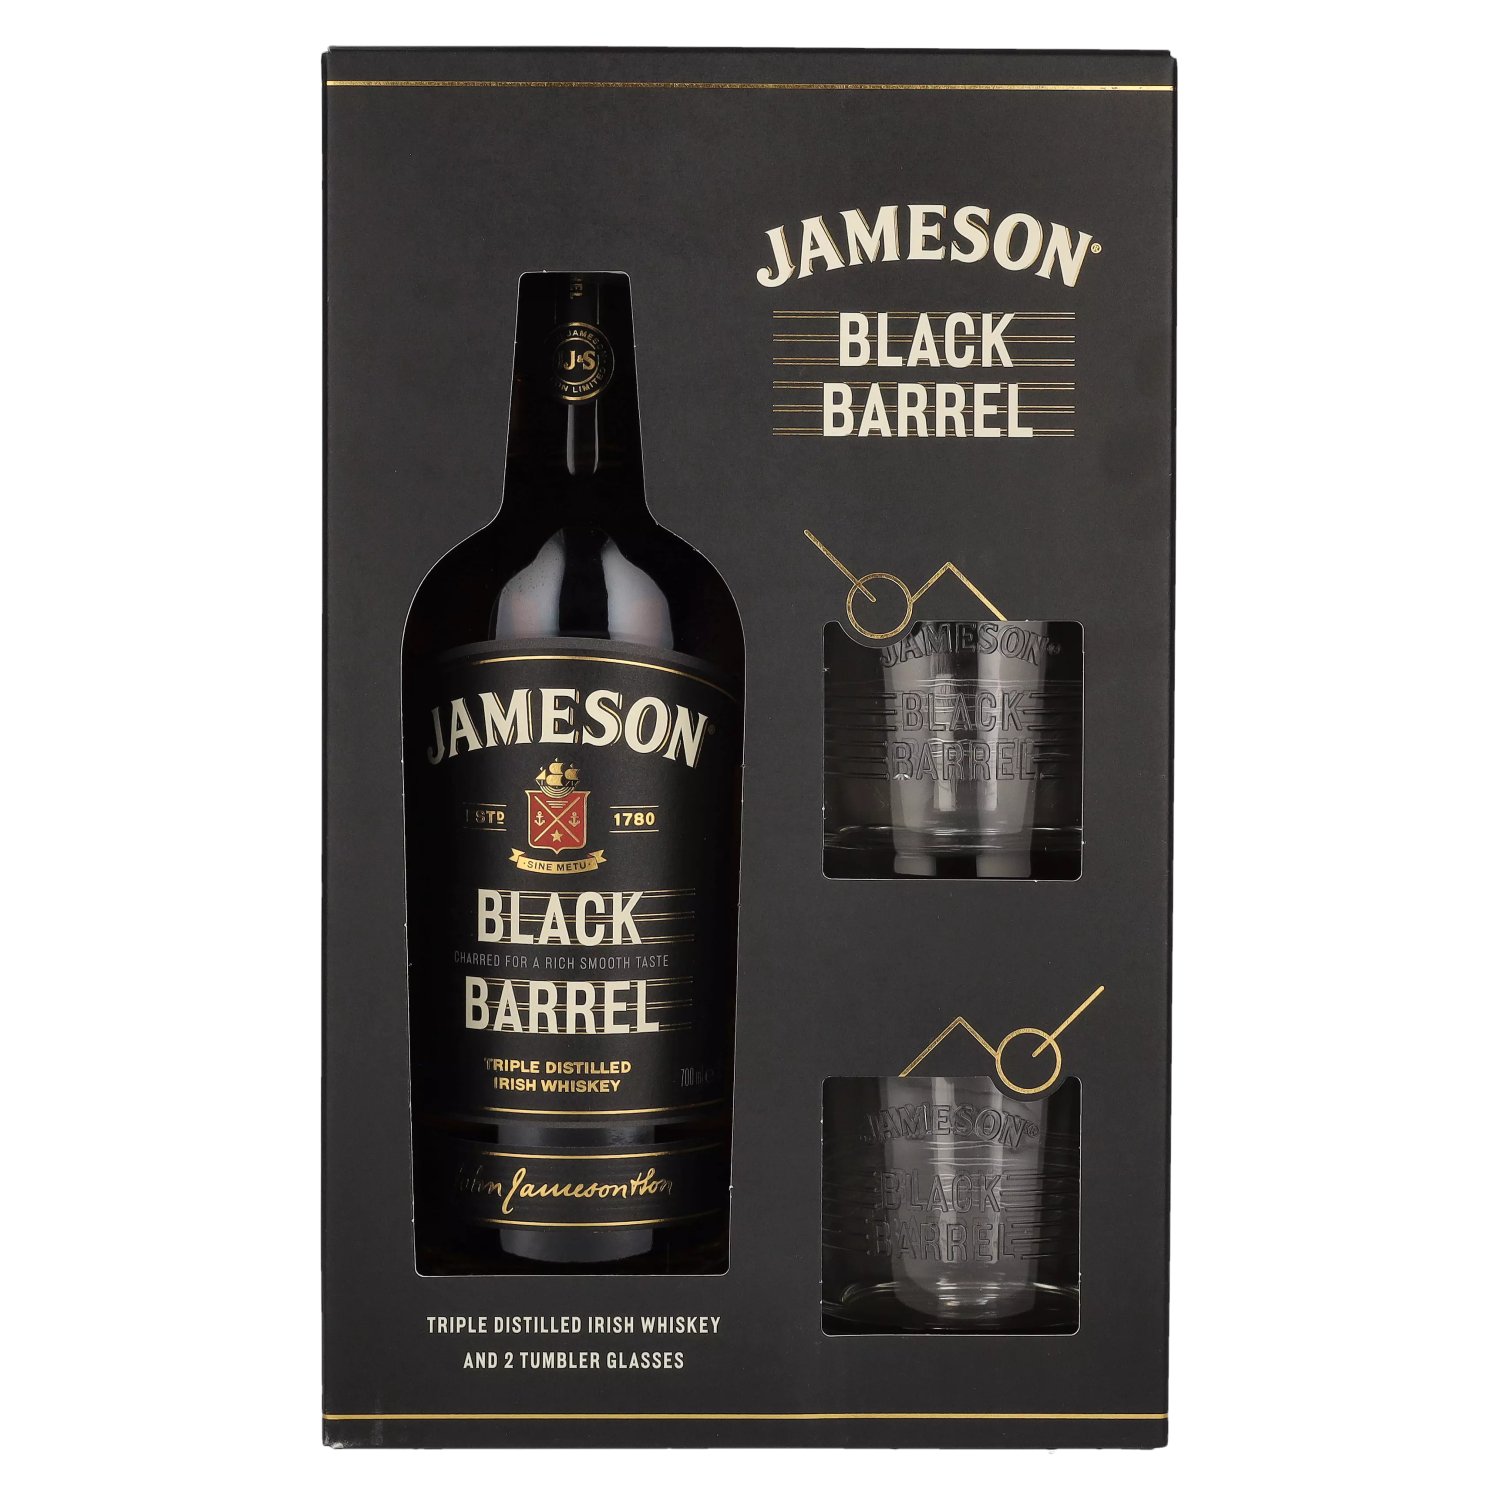 Jameson BLACK BARREL Triple Distilled Irish Whiskey 40% Vol. 0,7l in  Giftbox with 2 glasses